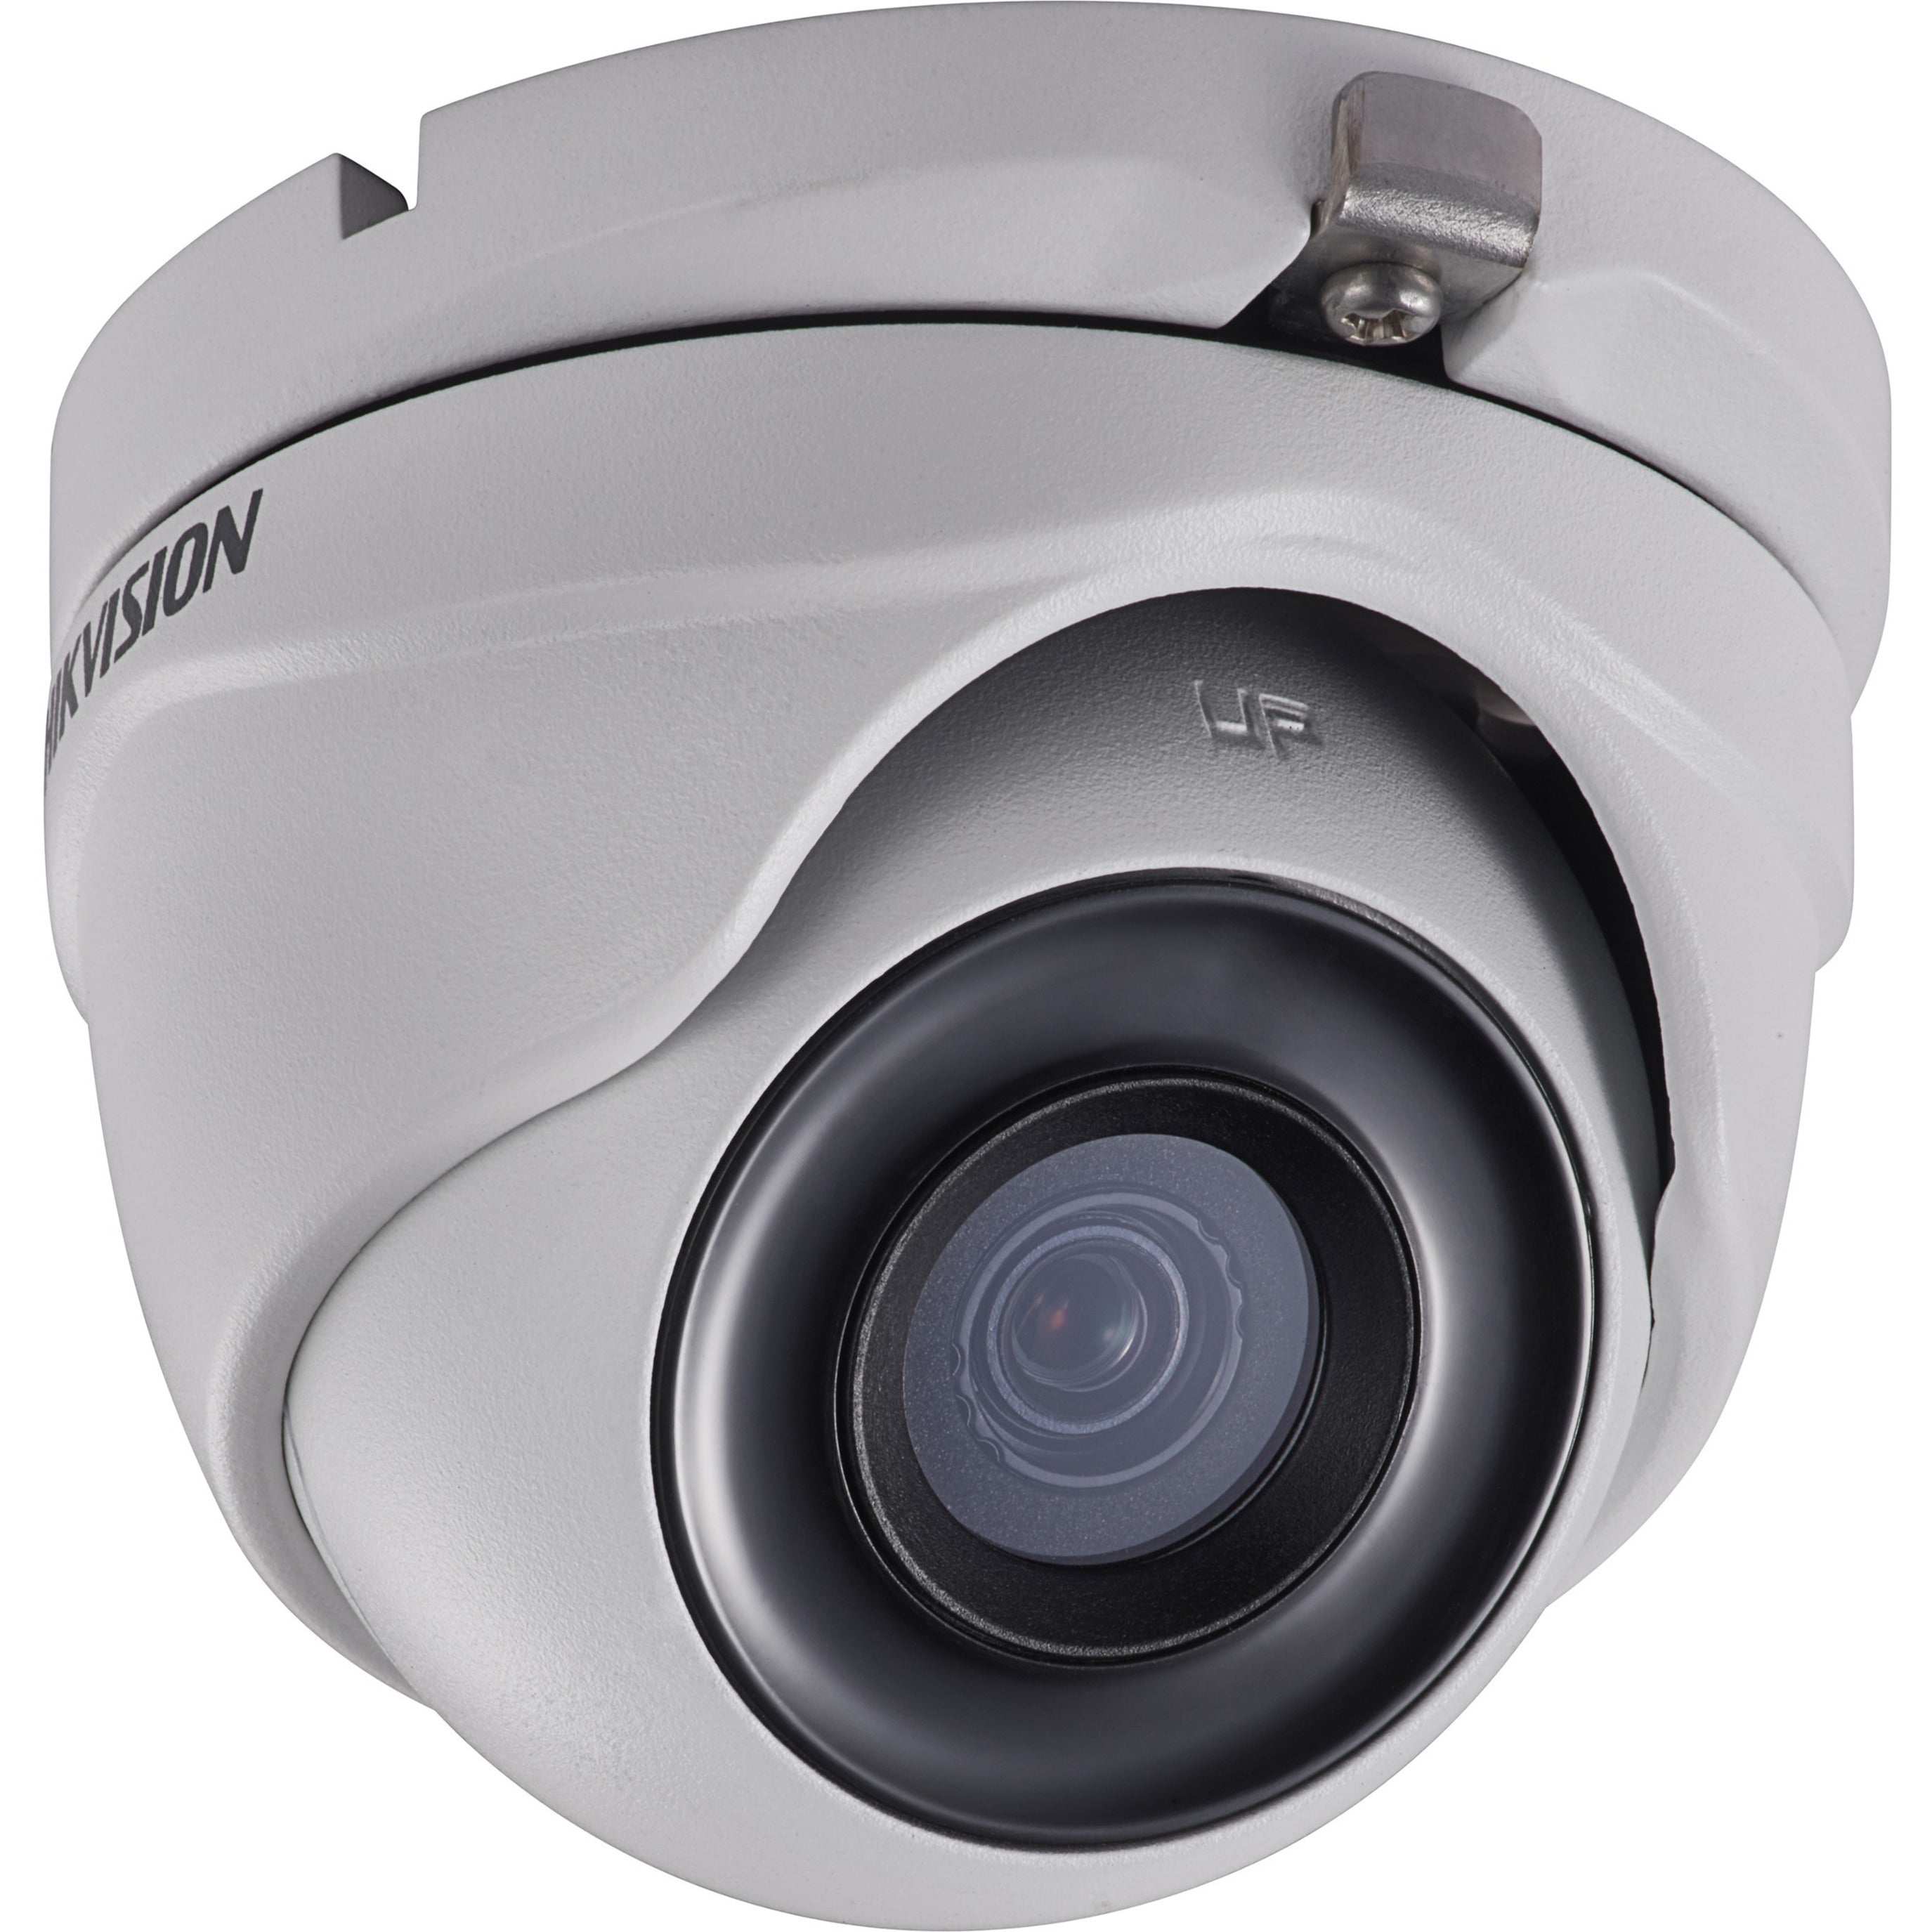 Hikvision DS-2CE76D3T-ITMF 2.8MM 2 MP Outdoor Ultra-Low Light Turret Camera, Wide Dynamic Range, 3D Digital Noise Reduction, Back Light Compensation (BLC), Highlight Compensation (HLC), Day/Night, IP67